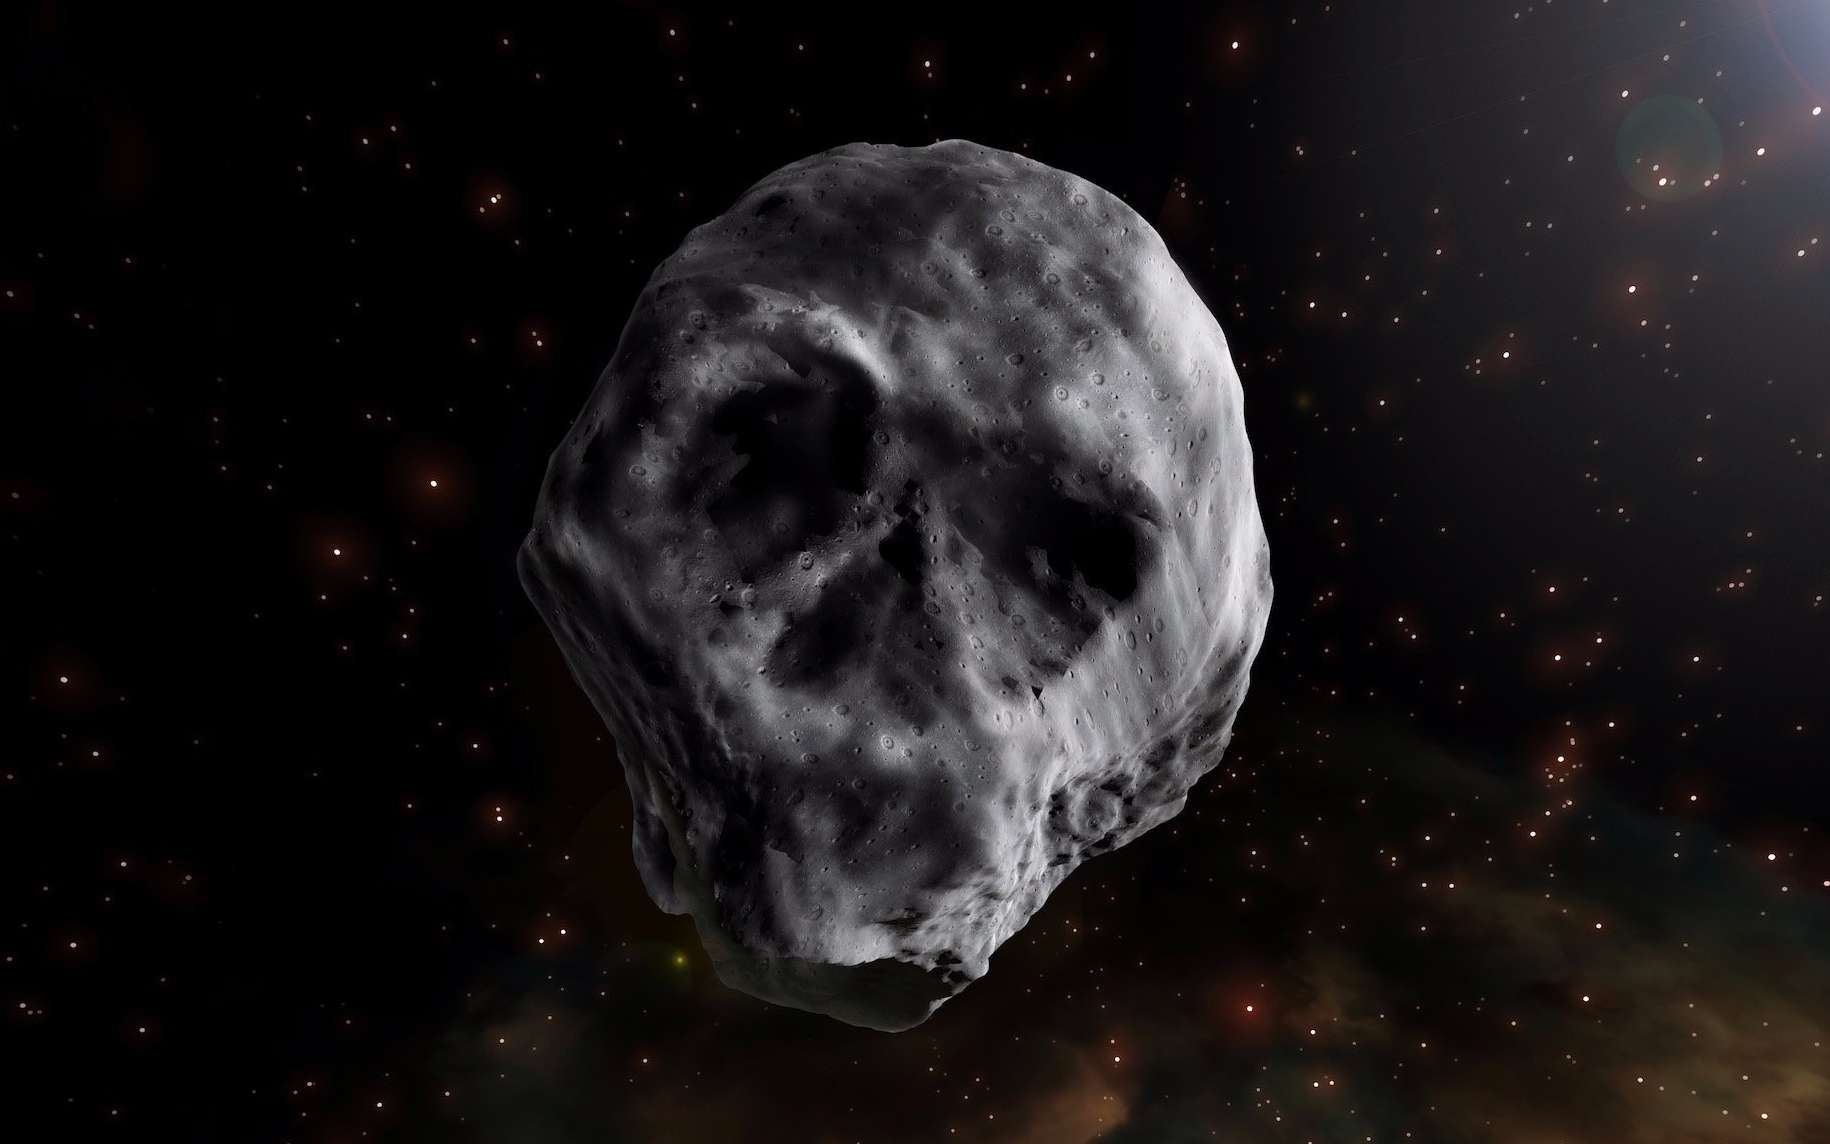 asteroide-halloween-tete-mort